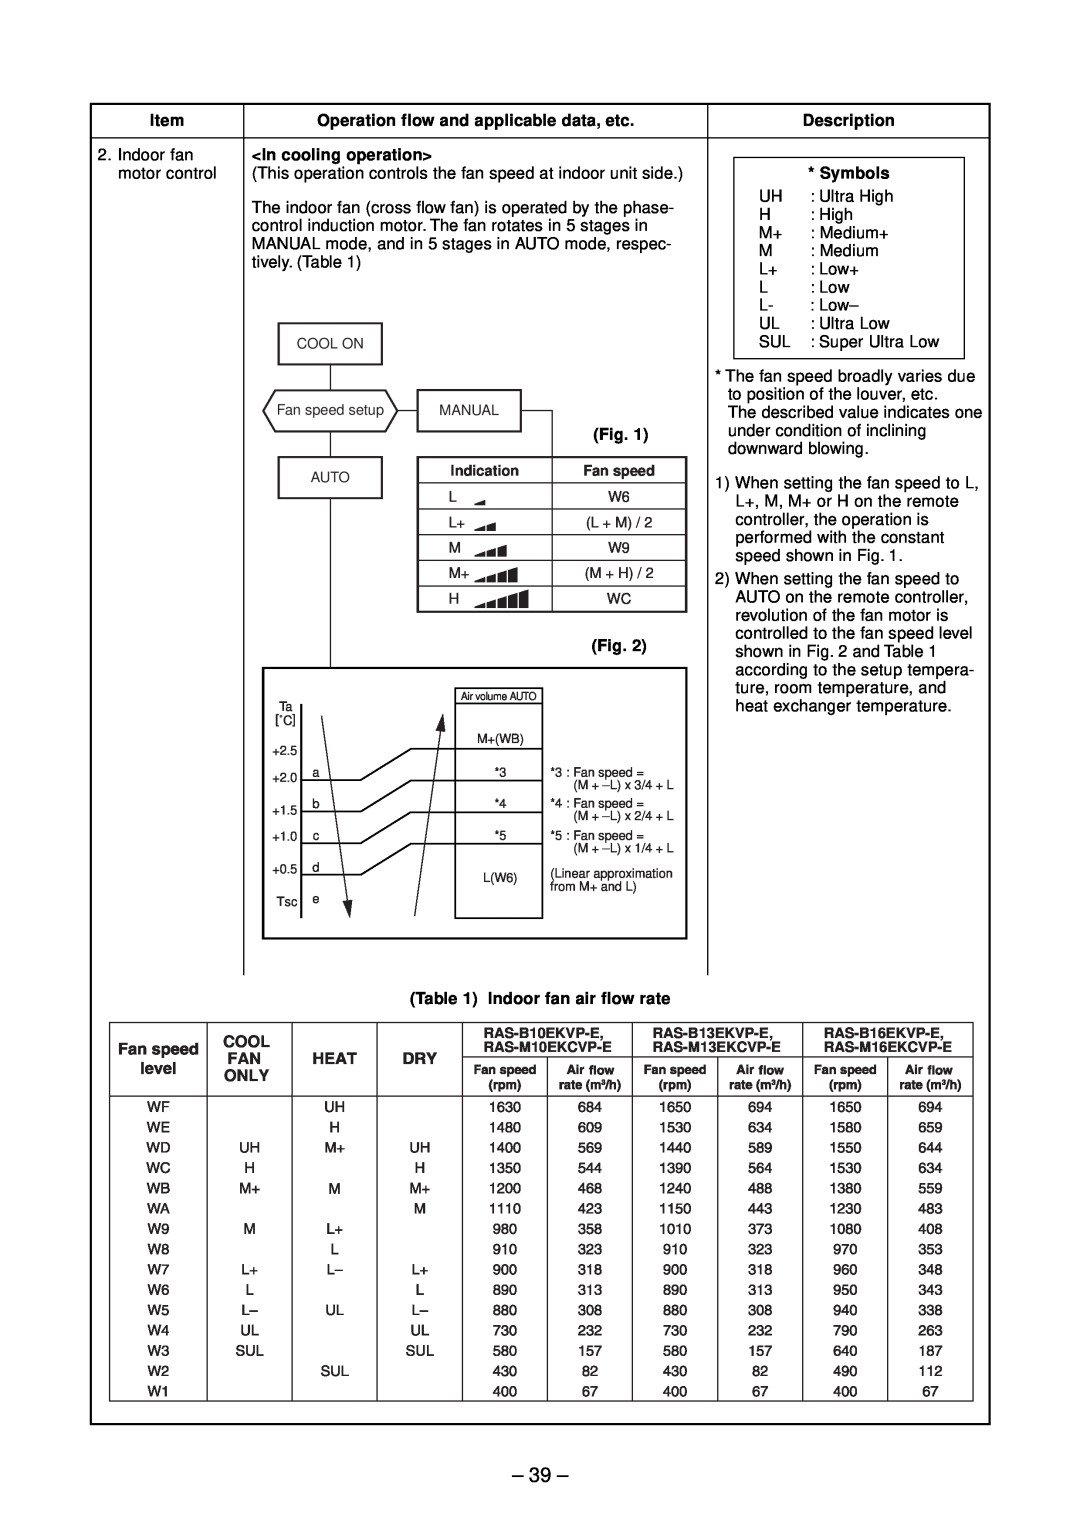 Toshiba RAS-M16EKCVP-E 39, Item, Operation flow and applicable data, etc, Description, <In cooling operation>, Symbols 